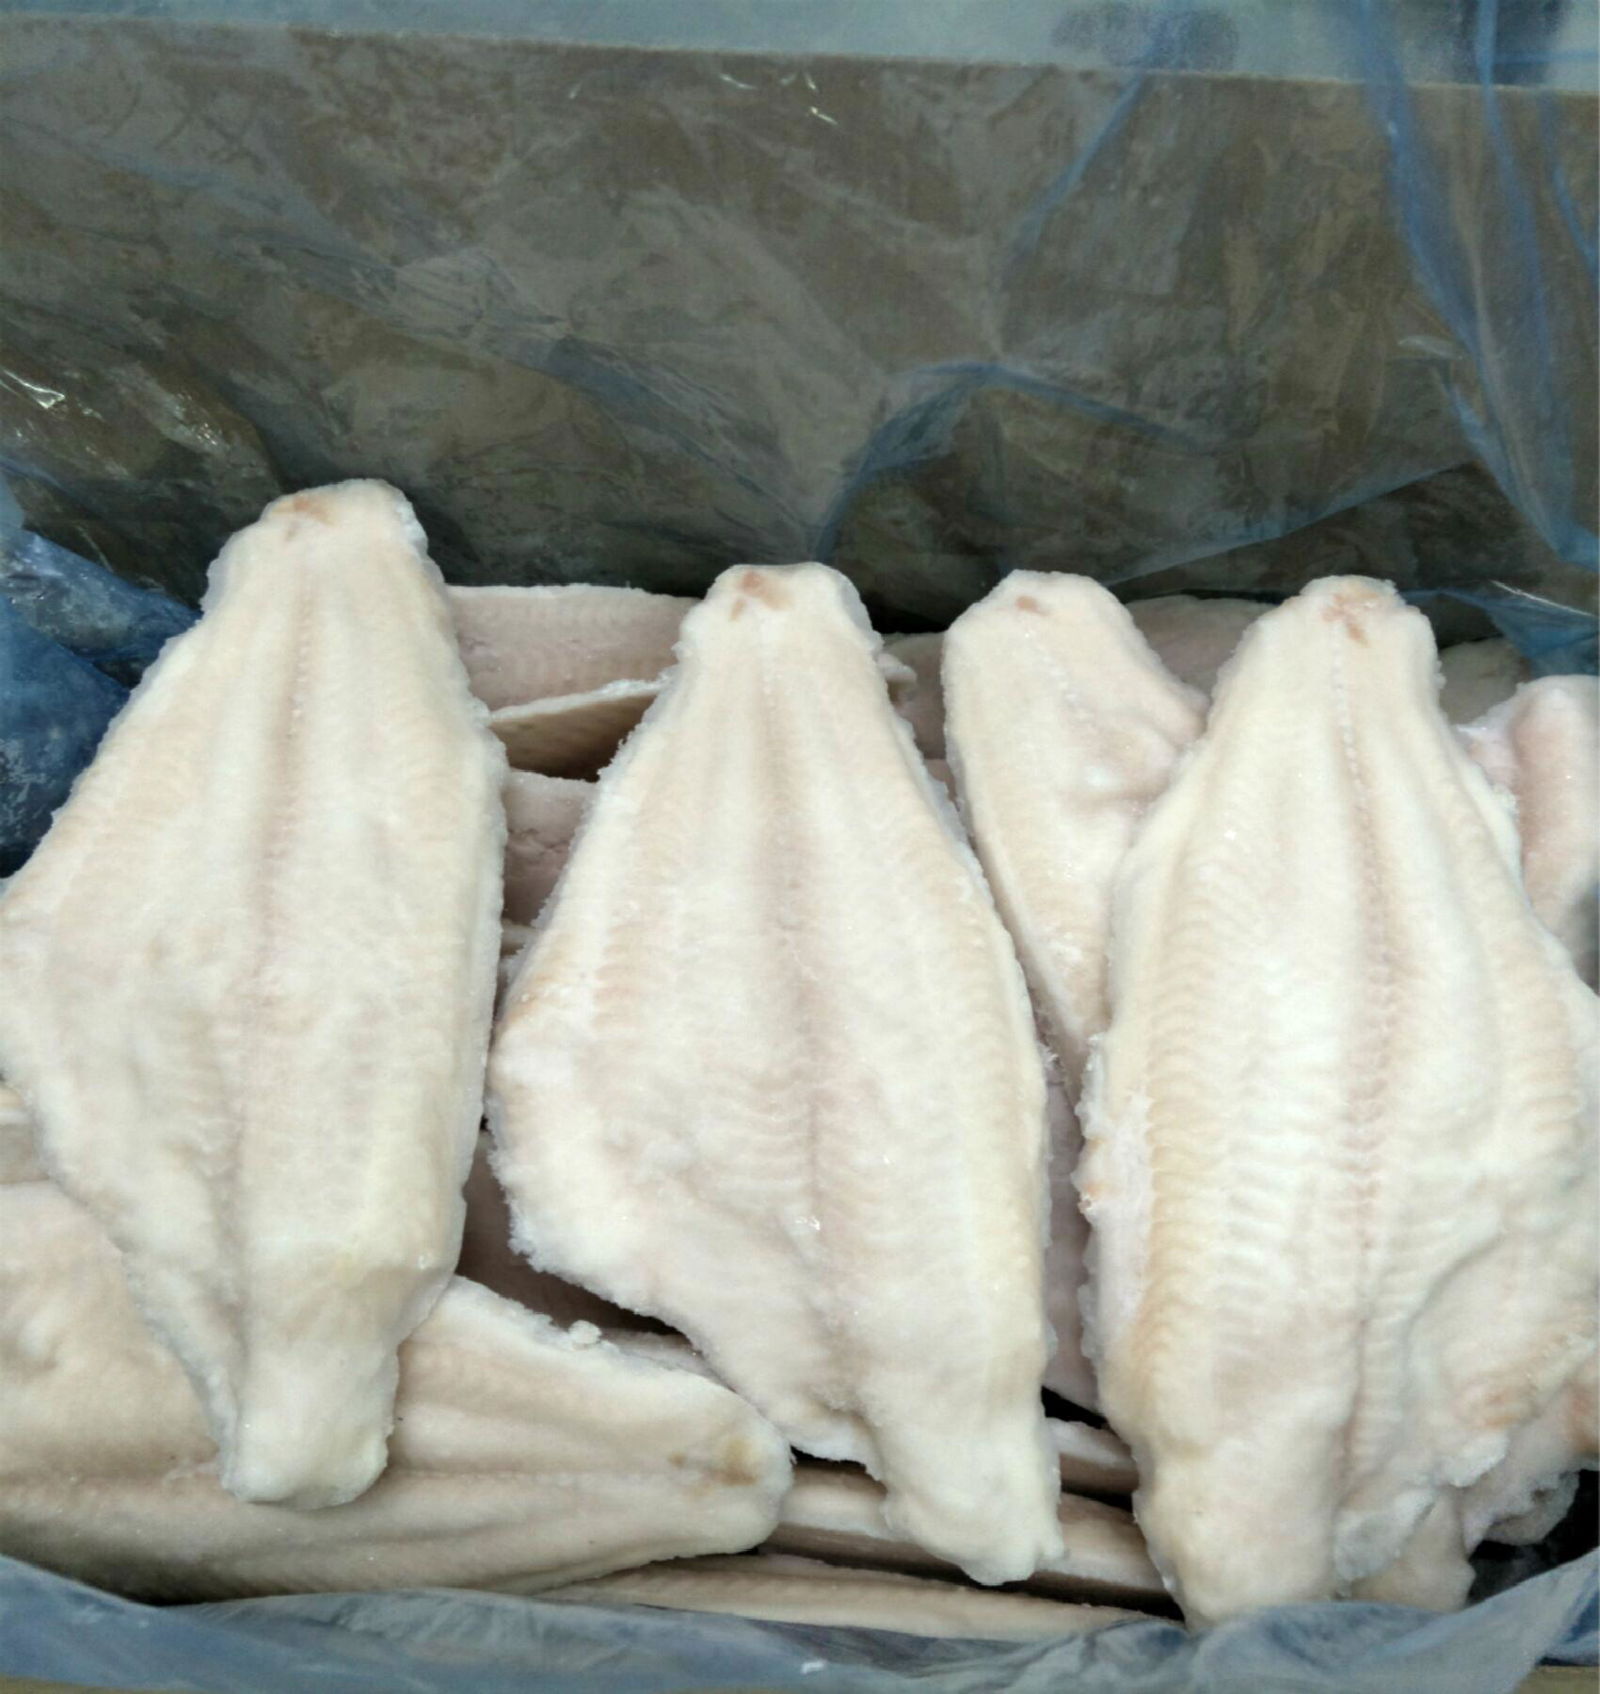 Frozen channel catfish fillets